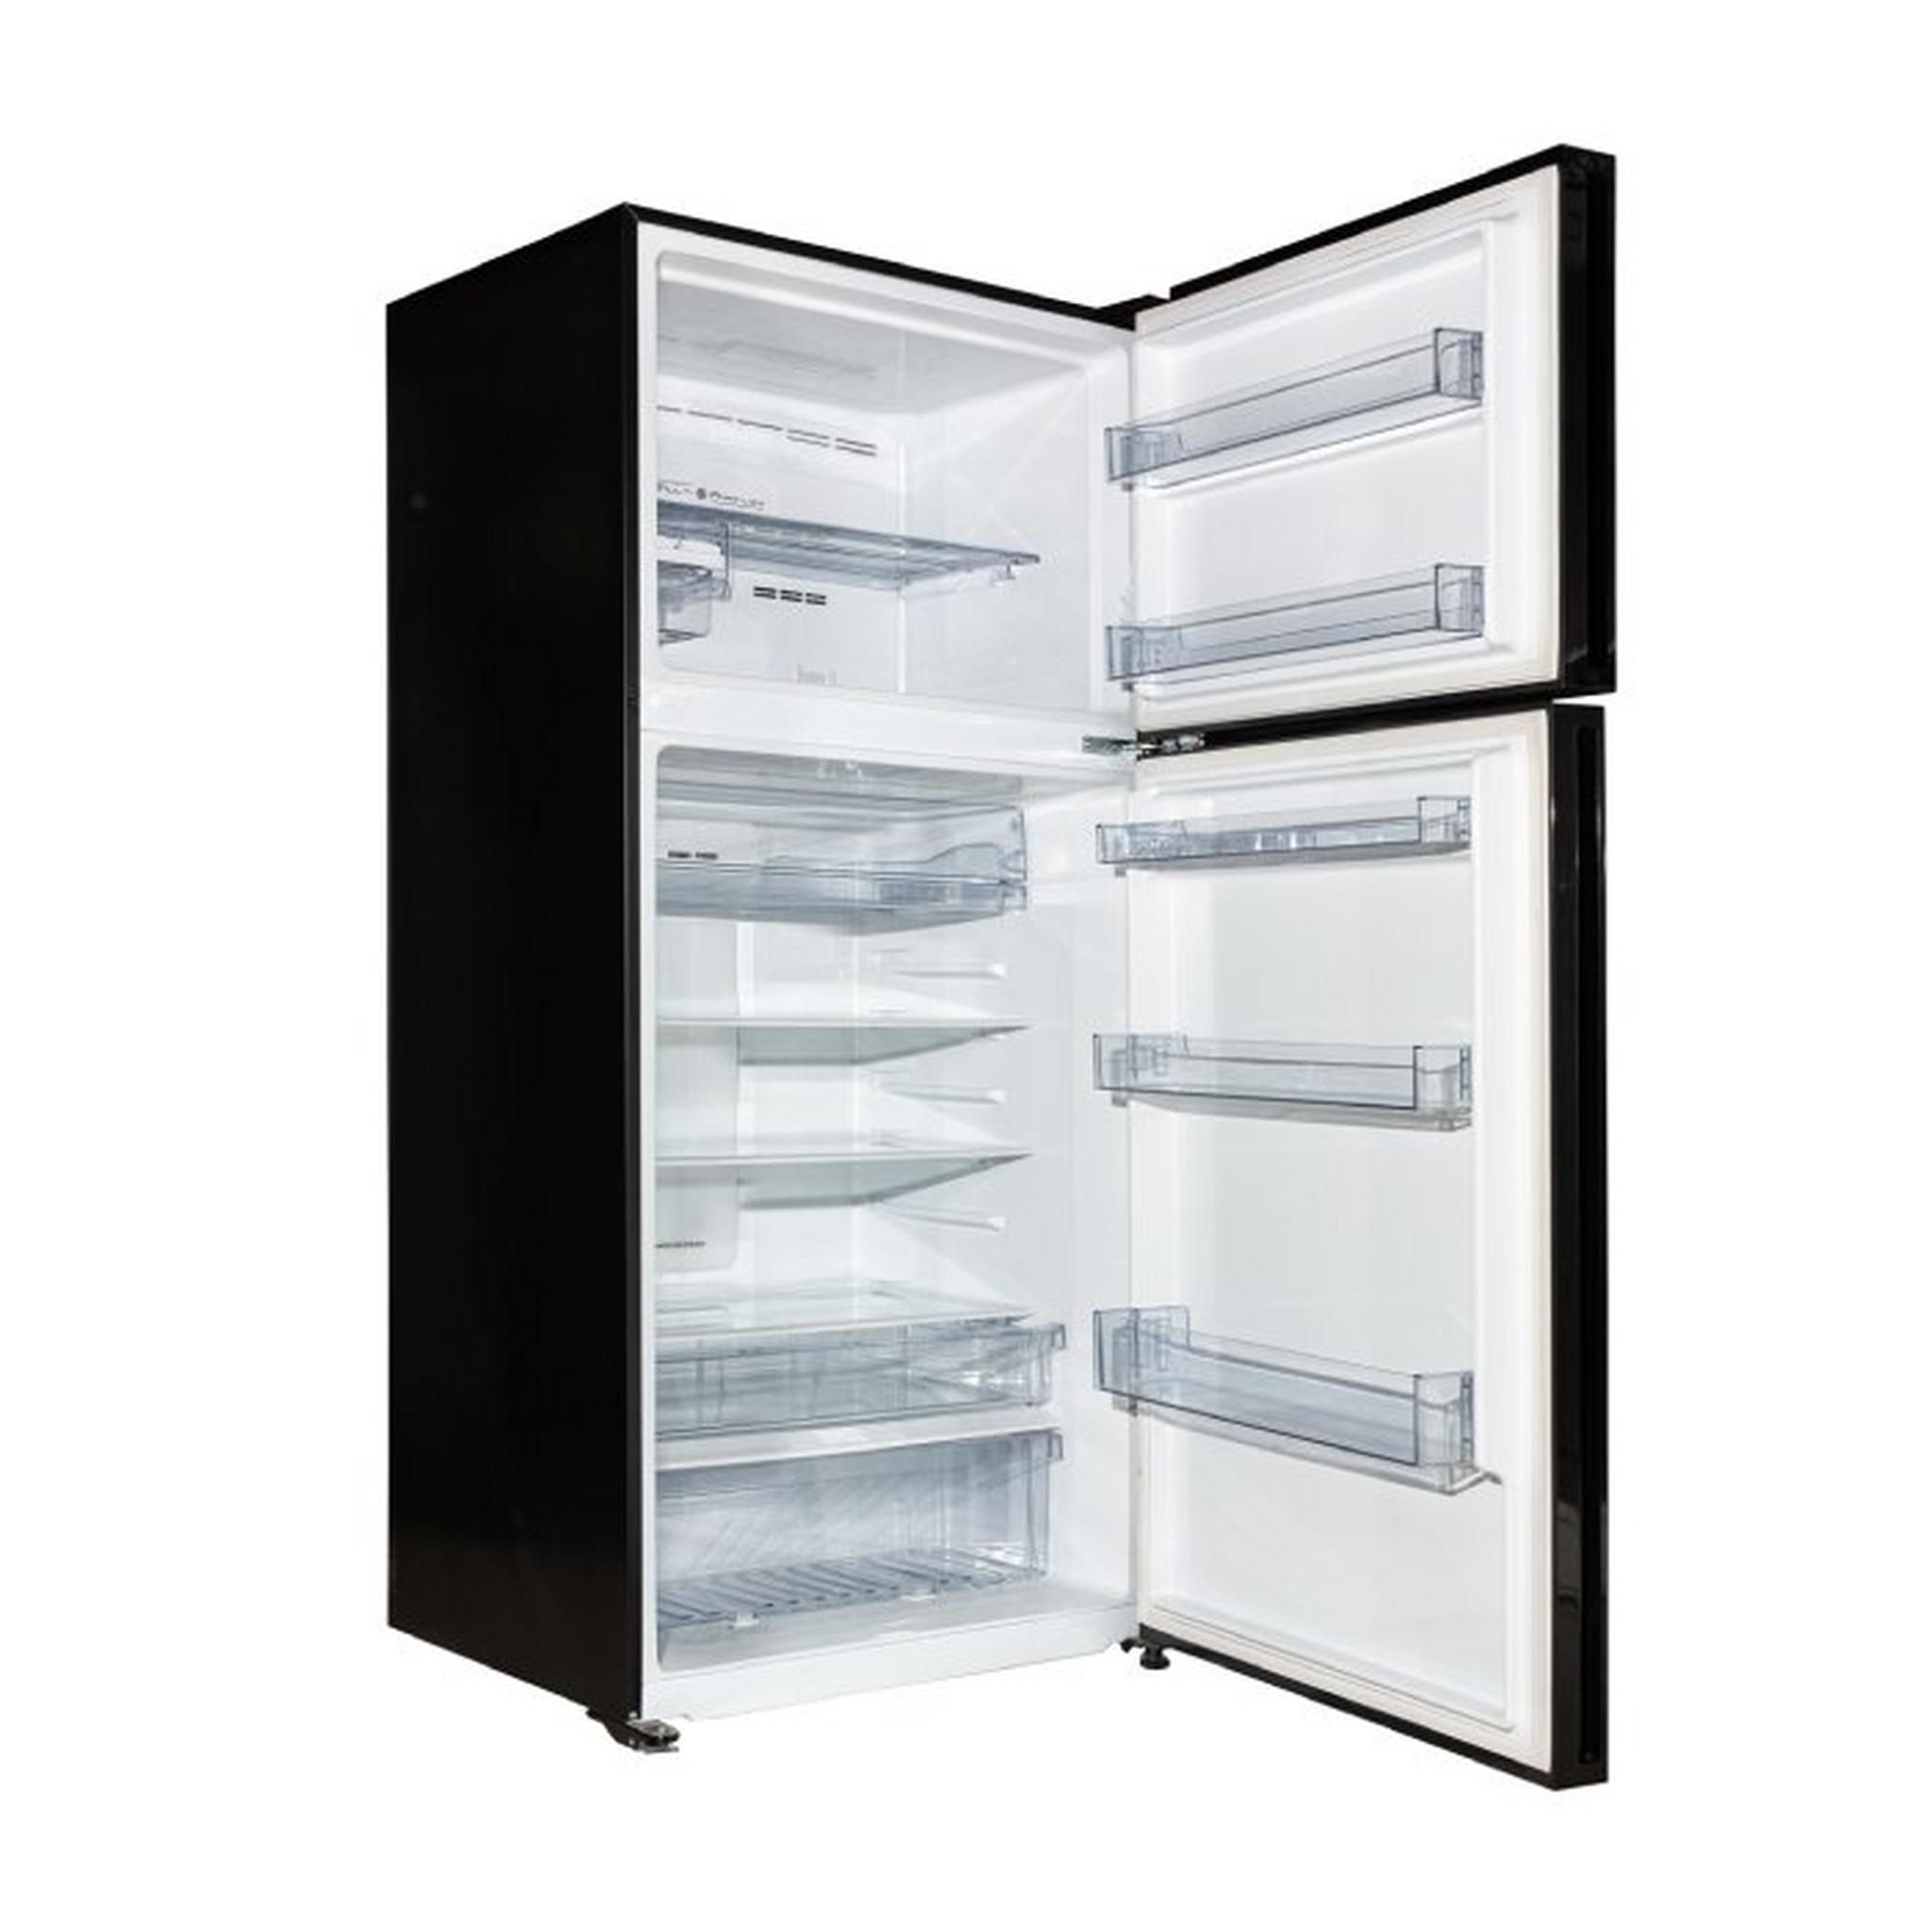 Haier 28CFT Top Mount Refrigerator (HRF-780FGPI GB) - Black